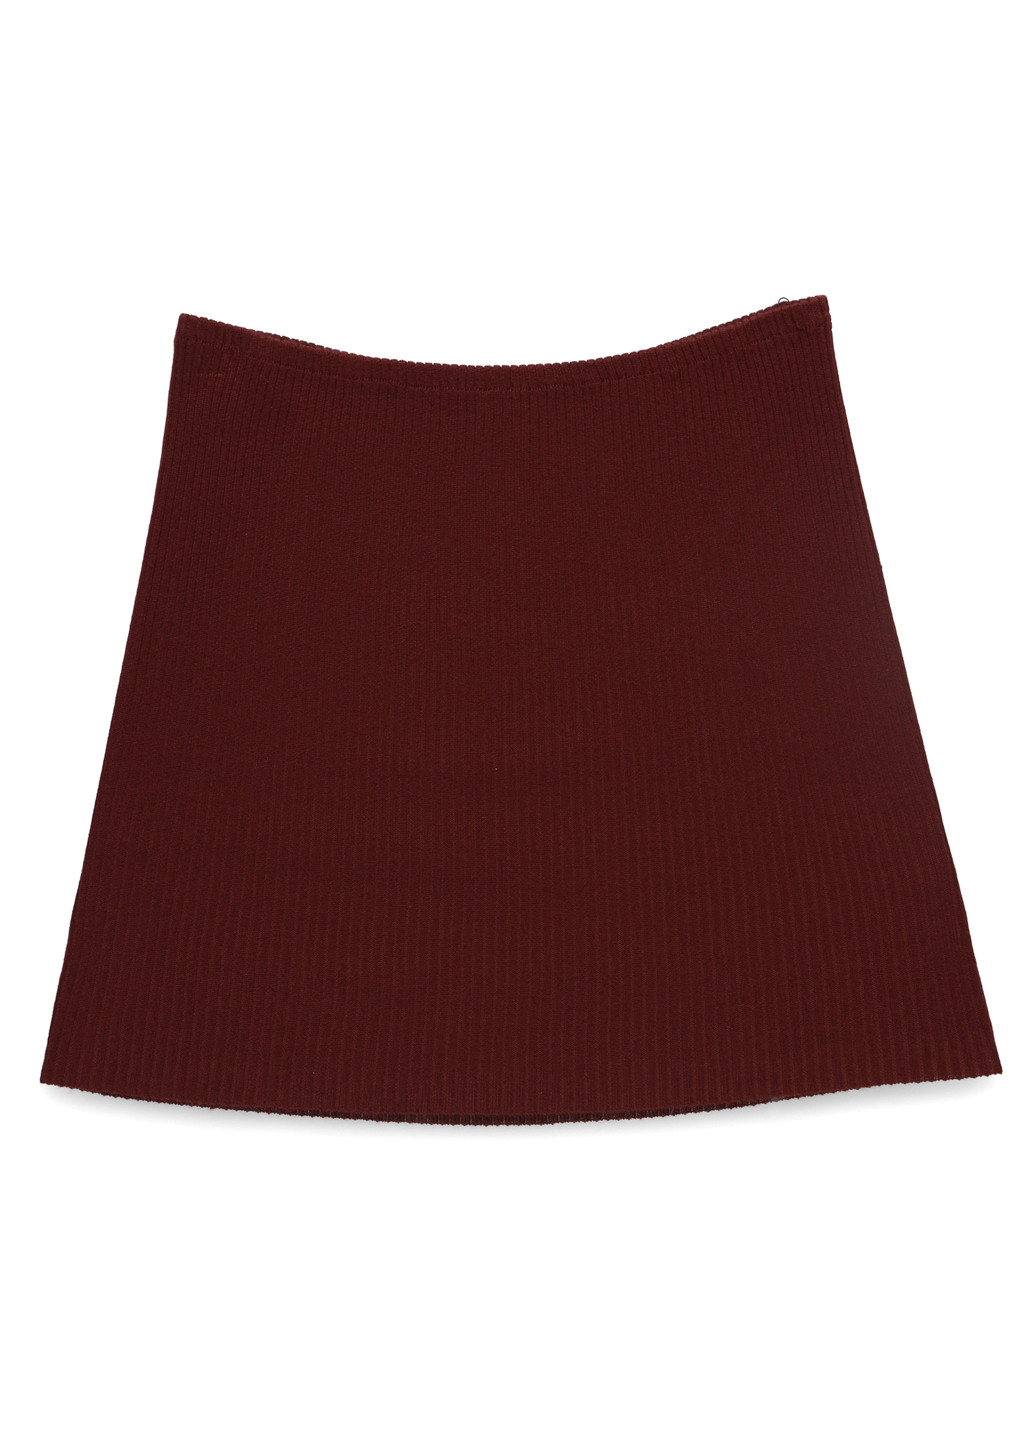 Бордовая кэжуал однотонная юбка Missguided а-силуэта (трапеция)